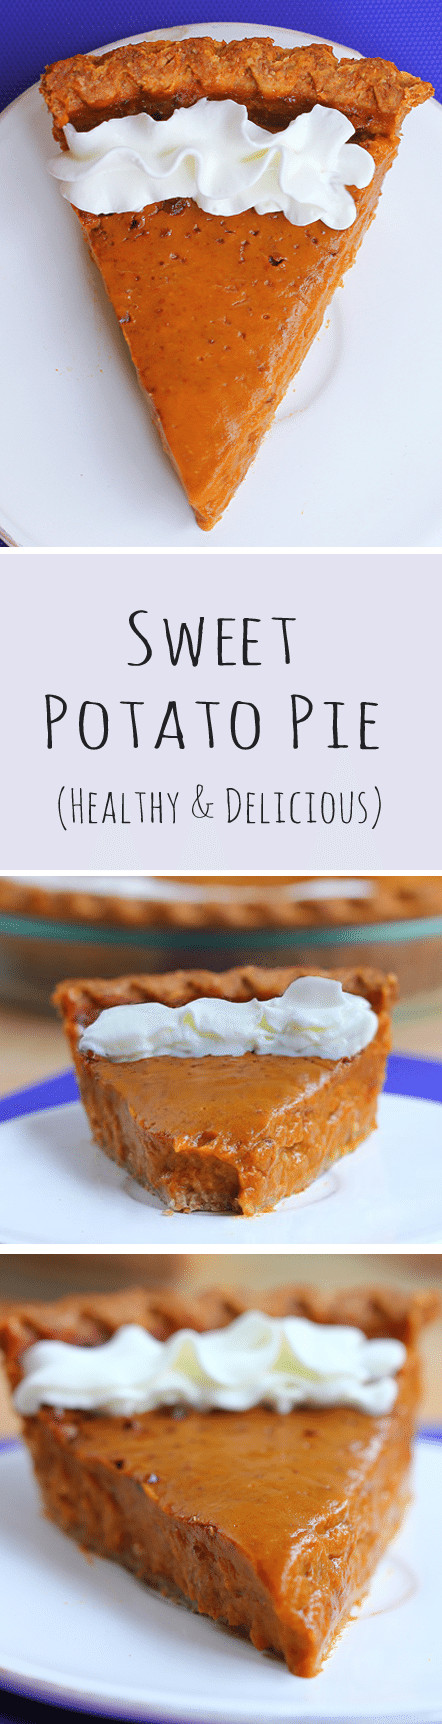 Is Sweet Potato Pie Healthy
 Healthy Sweet Potato Pie with homemade pie crust